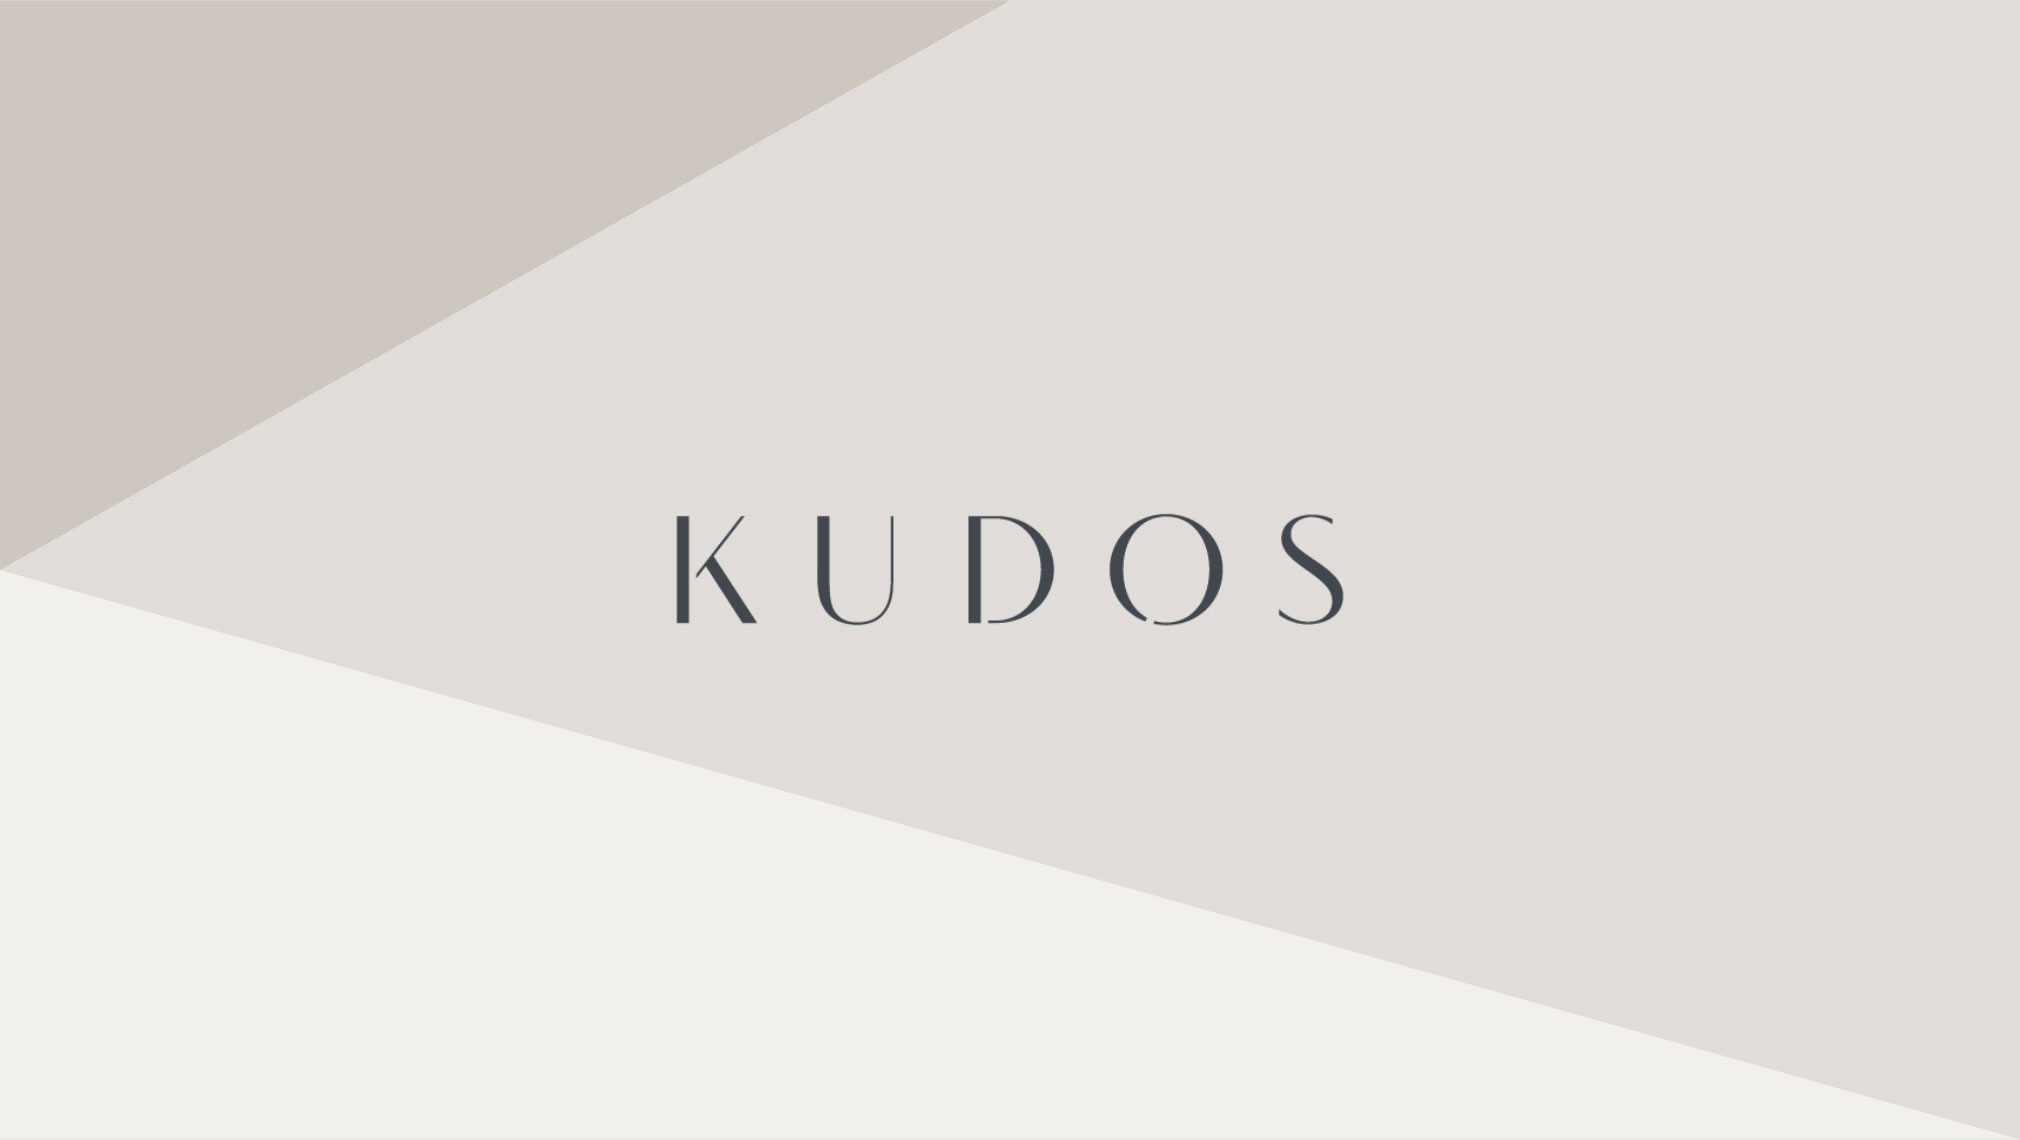 Kudos brand identity, with a sense of elegance and spacial design